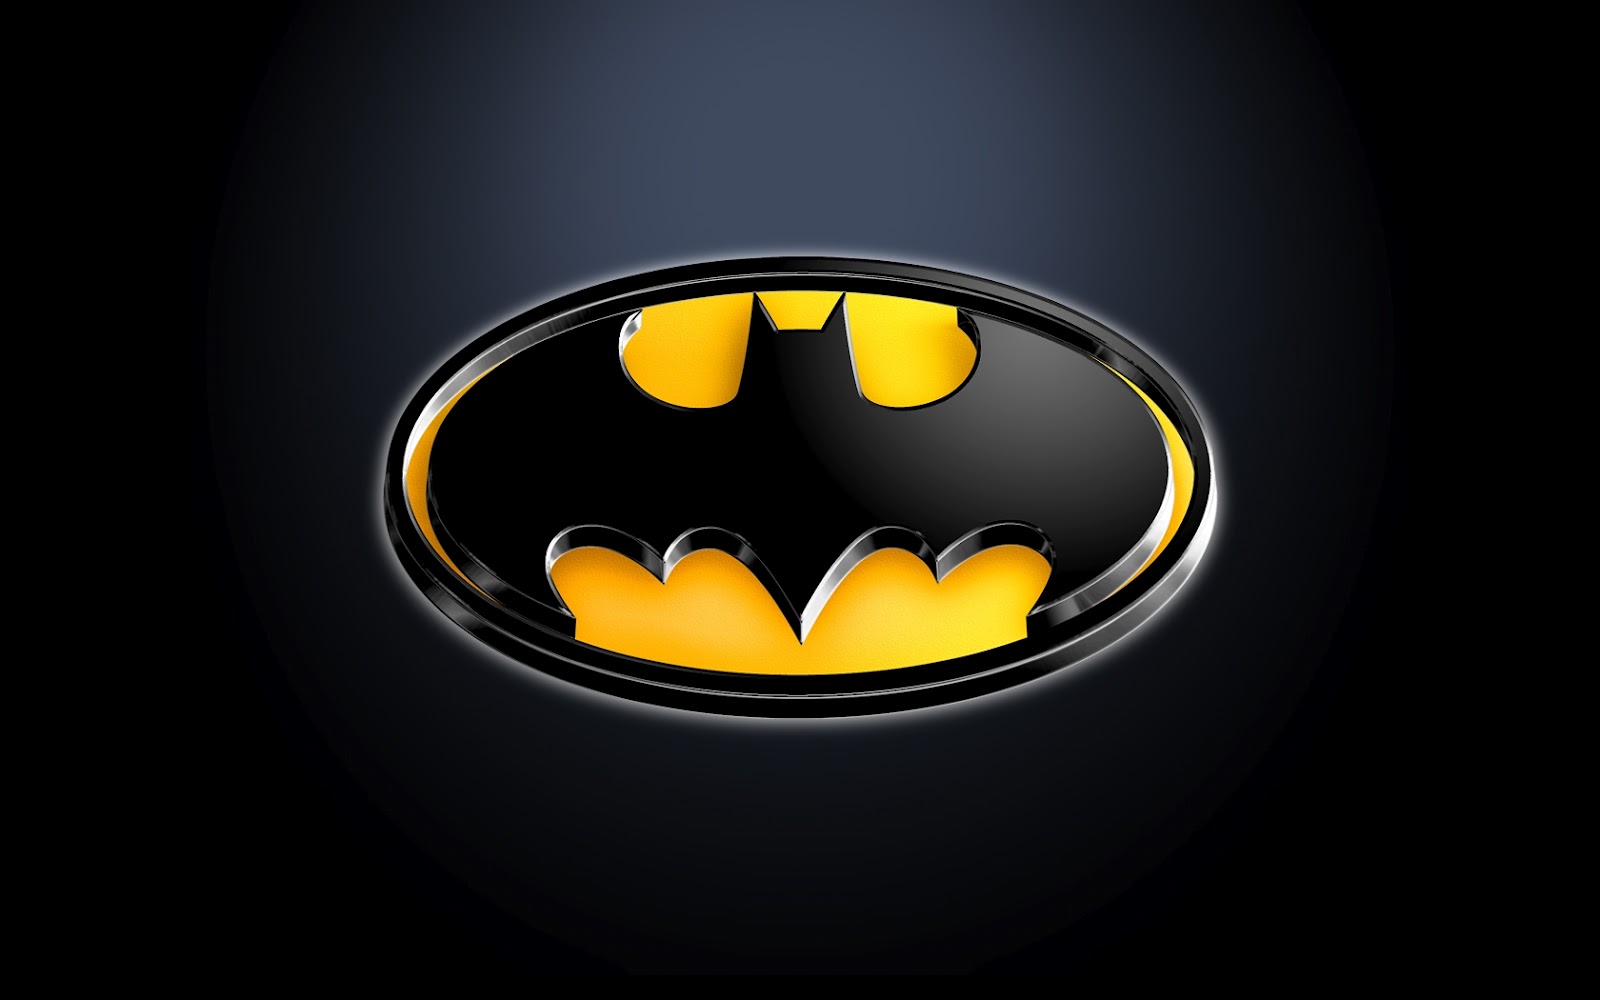 Batman Logo Widescreen Desktop Wallpapers 308 - HD Wallpapers Site